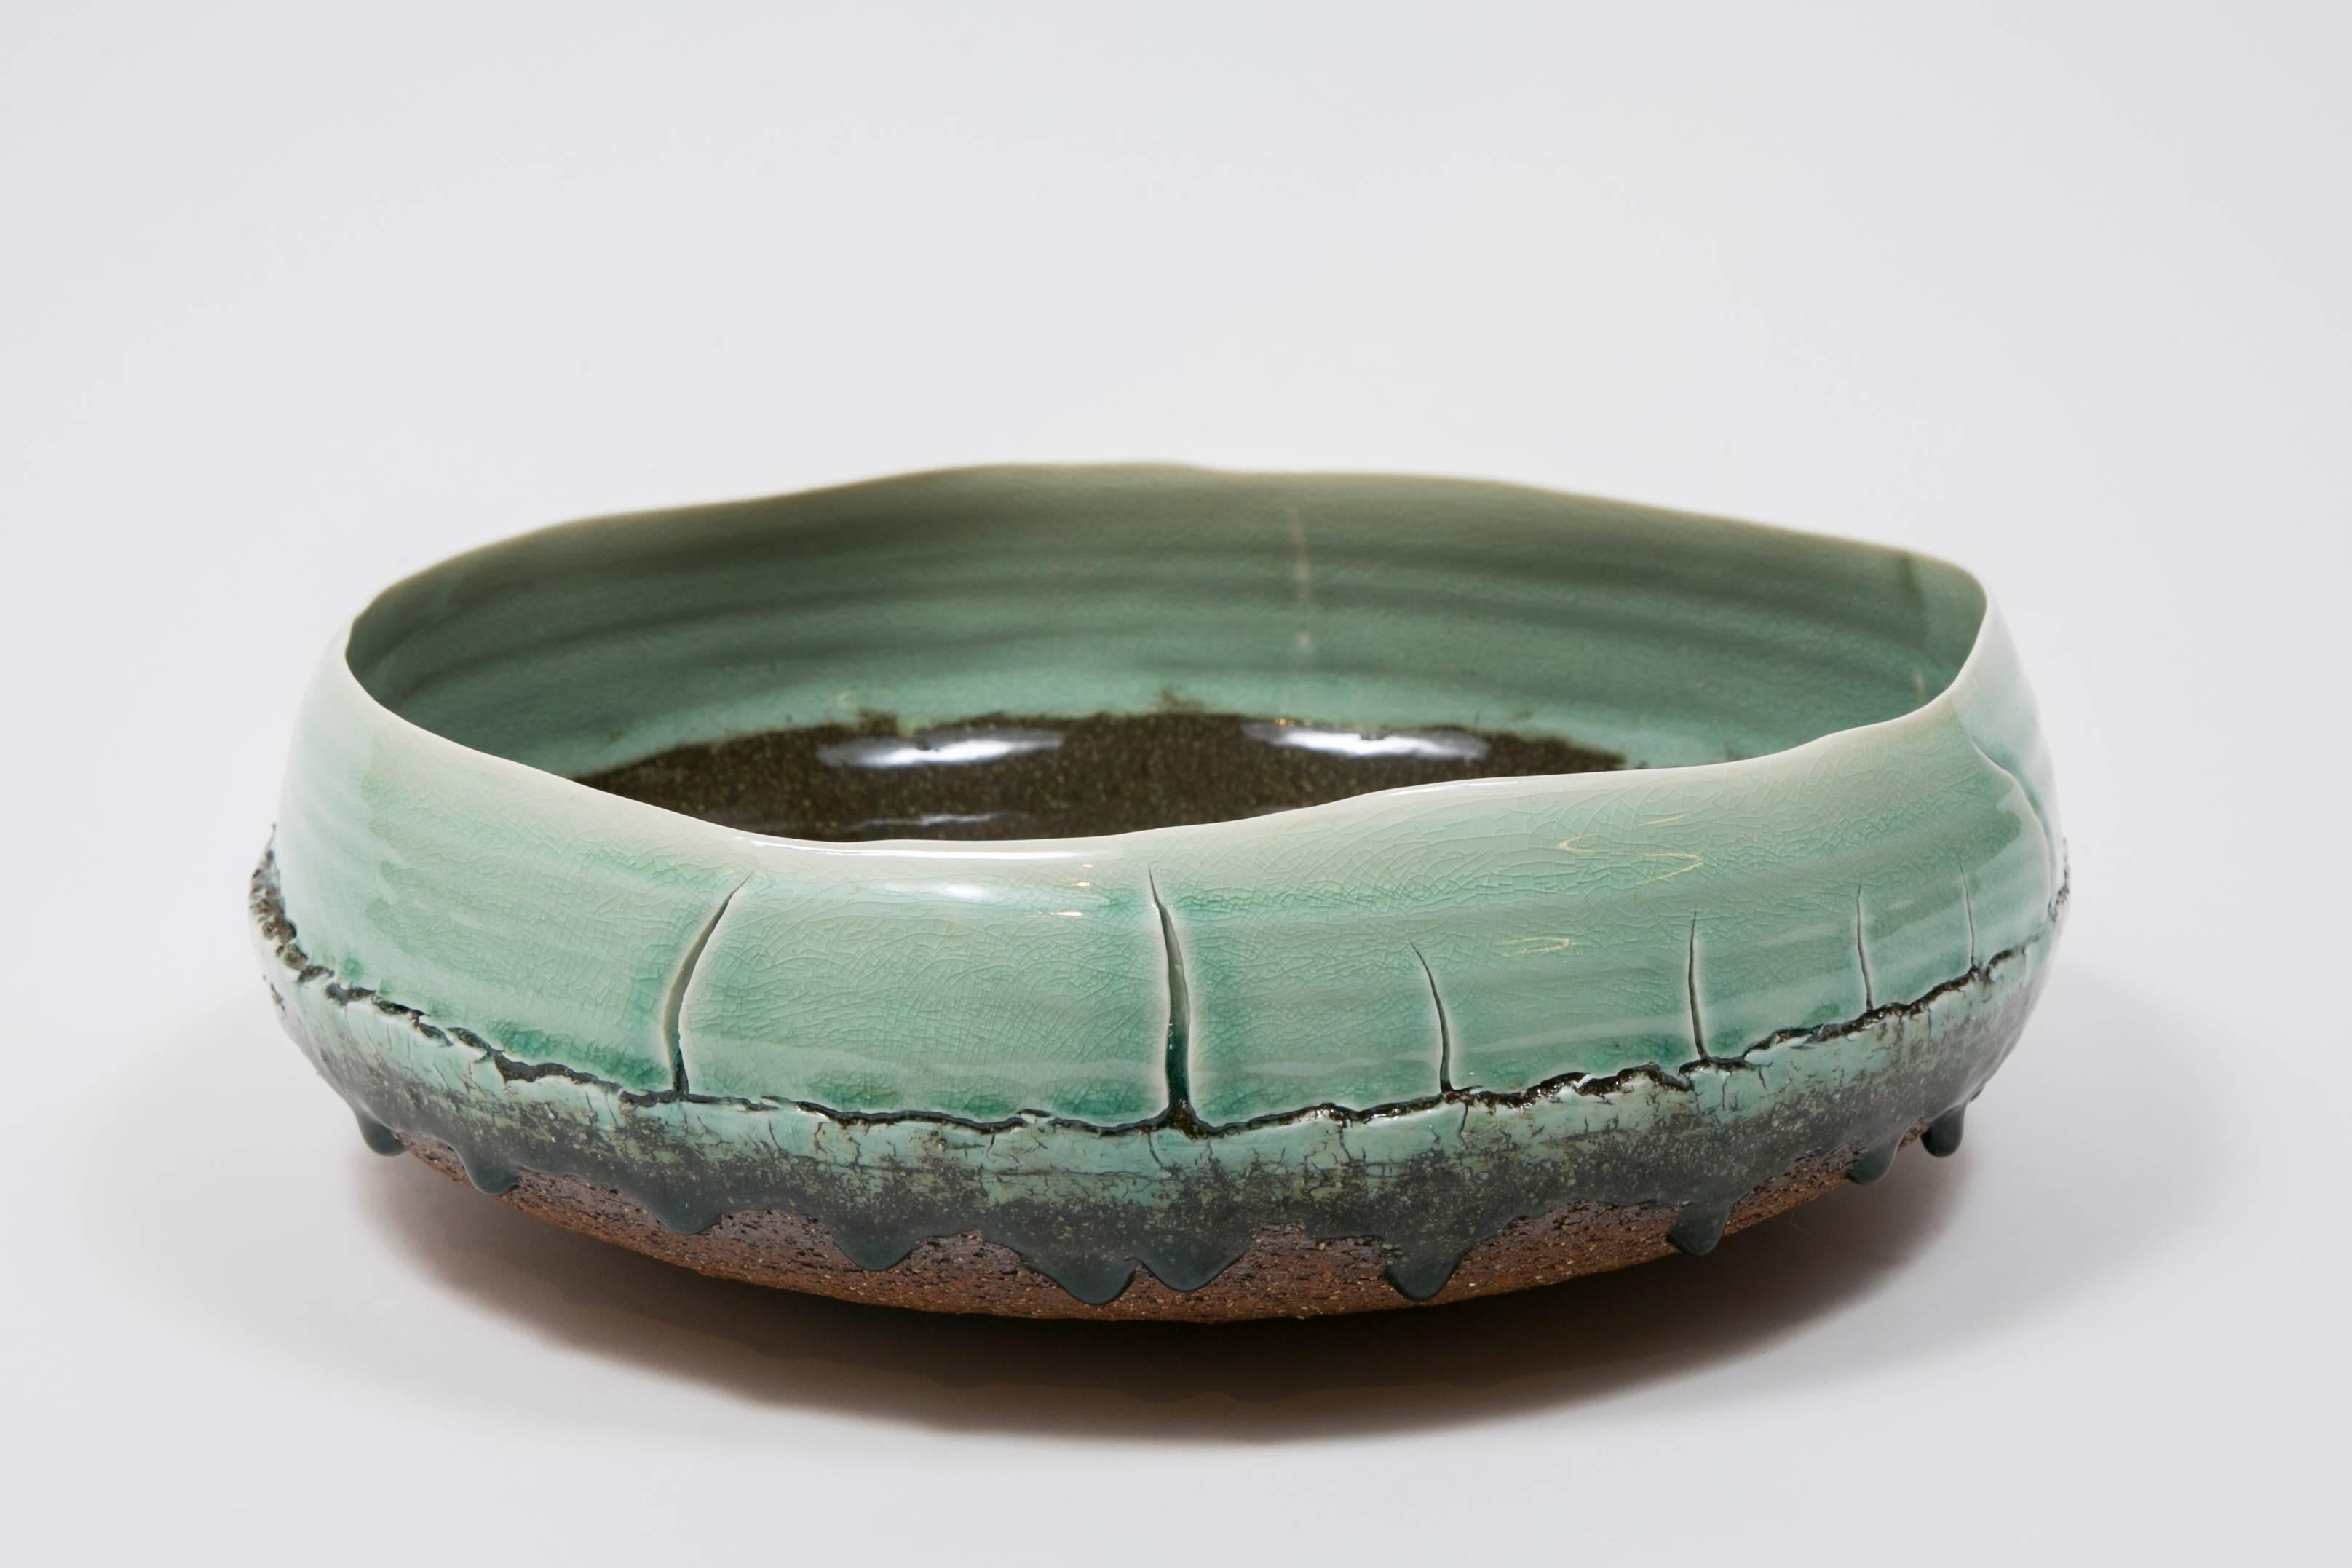 An elegant enameled ceramic bowl by Spanish ceramist Joan Serra (b.1962)
Signature under the base.